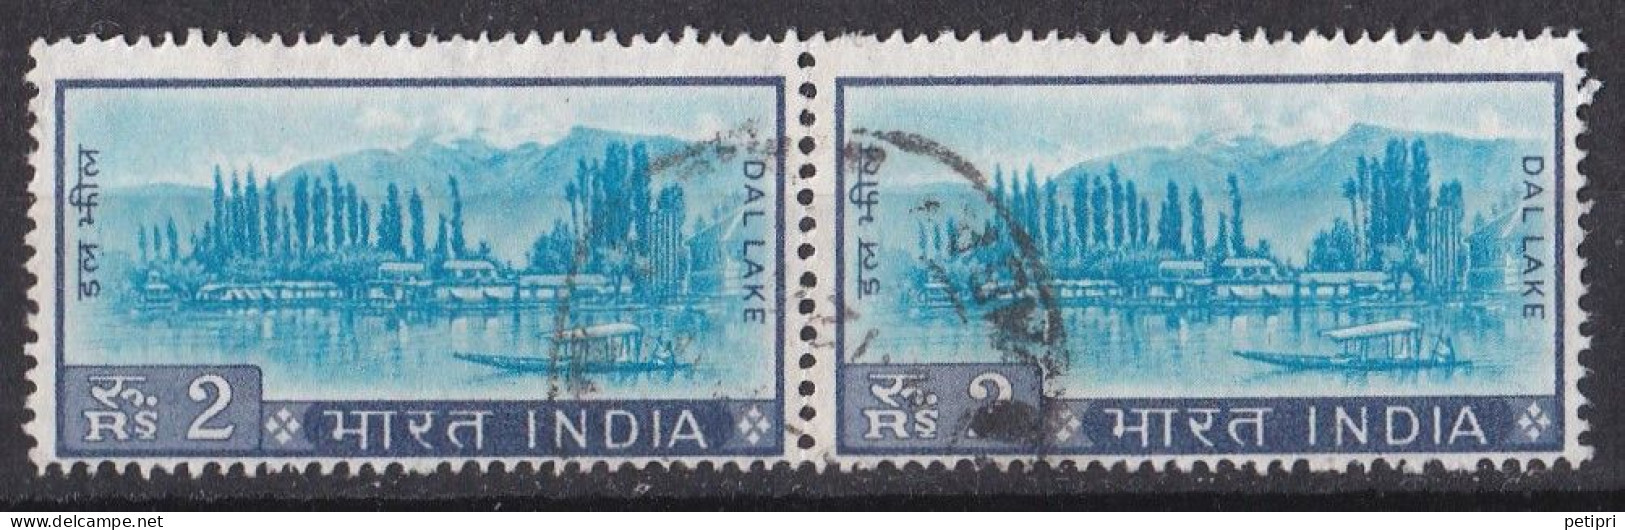 Inde  - 1960  1969 -   Y&T  N °  231  Paire Oblitérée - Usati